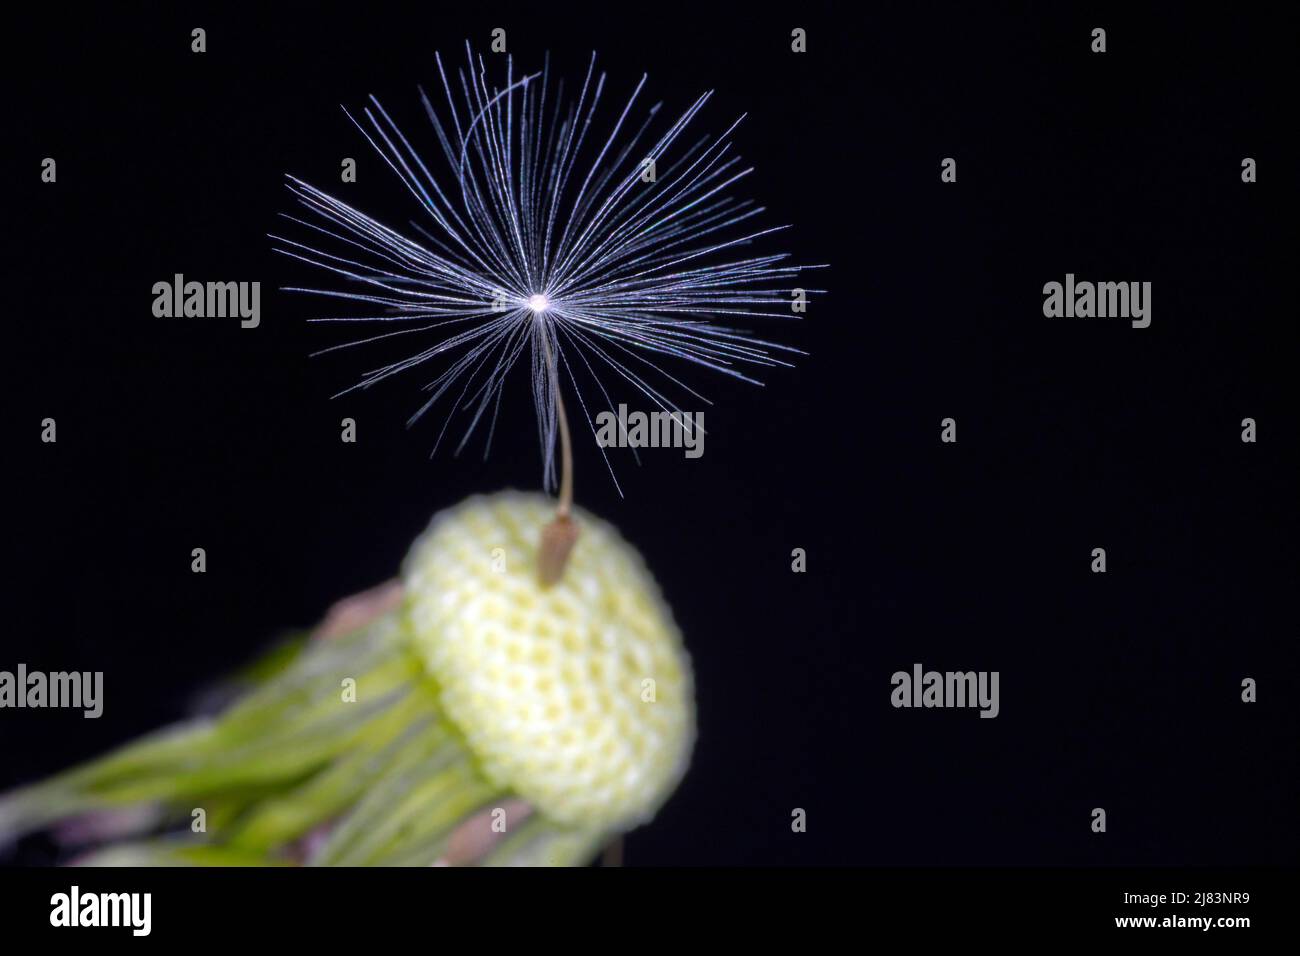 Seed umbrella of a common dandelion (Taraxacum sect. Ruderalia), studio photograph with a black background Stock Photo